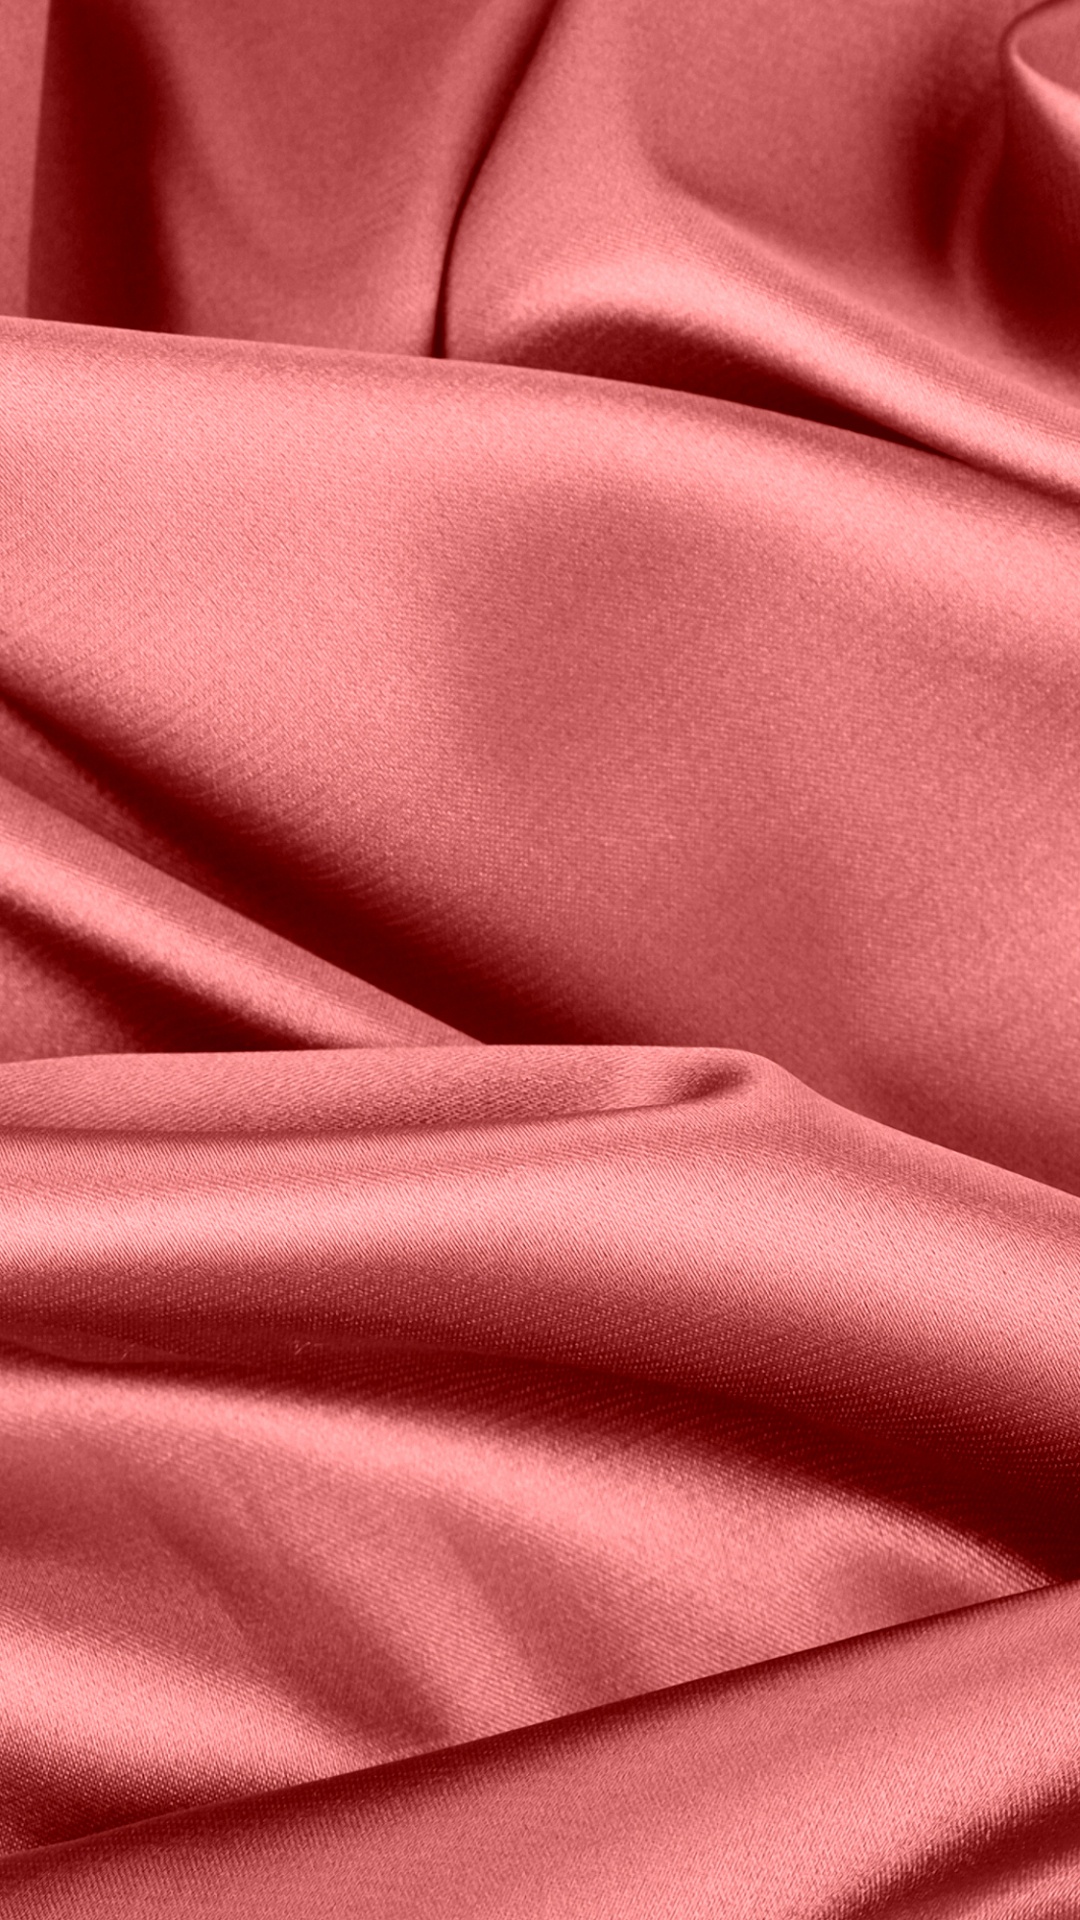 Rotes Textil in Nahaufnahmen. Wallpaper in 1080x1920 Resolution